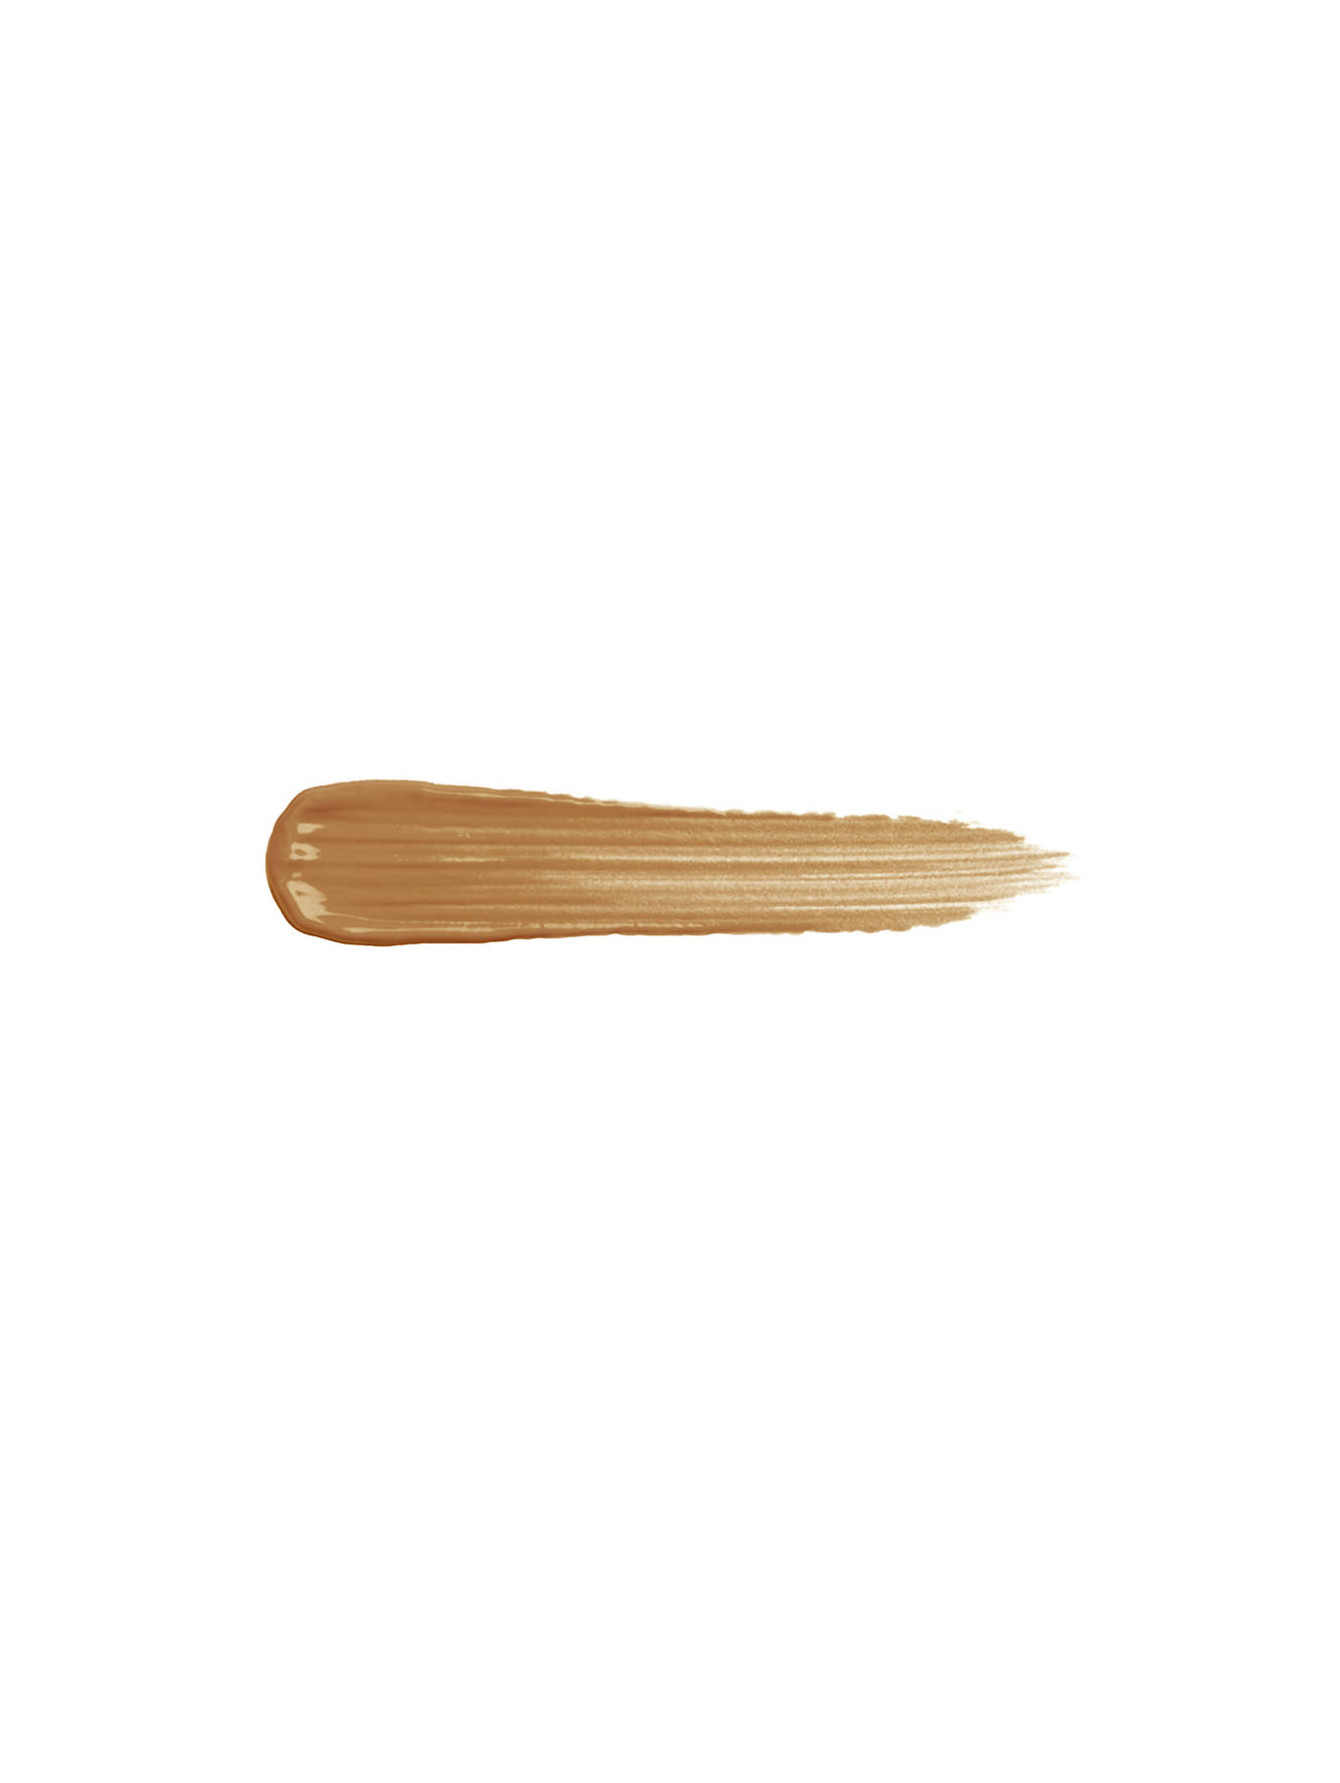 Хайлайтер-карандаш № 6 Золотисто-коричневый, Makeup - Обтравка1